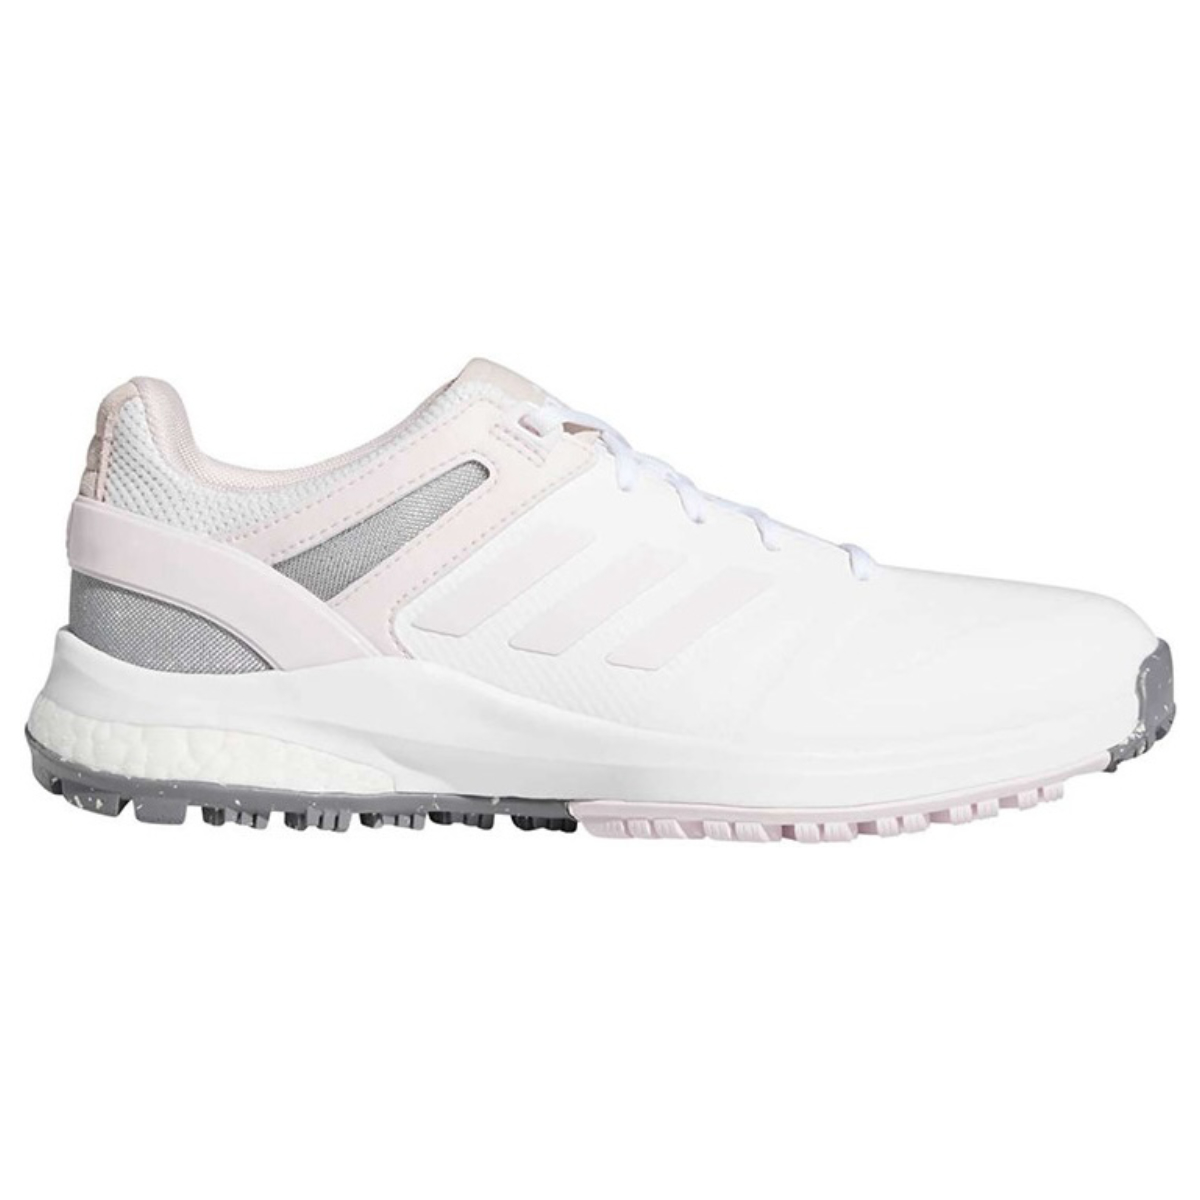 Adidas EQT SL White/Pink Damen